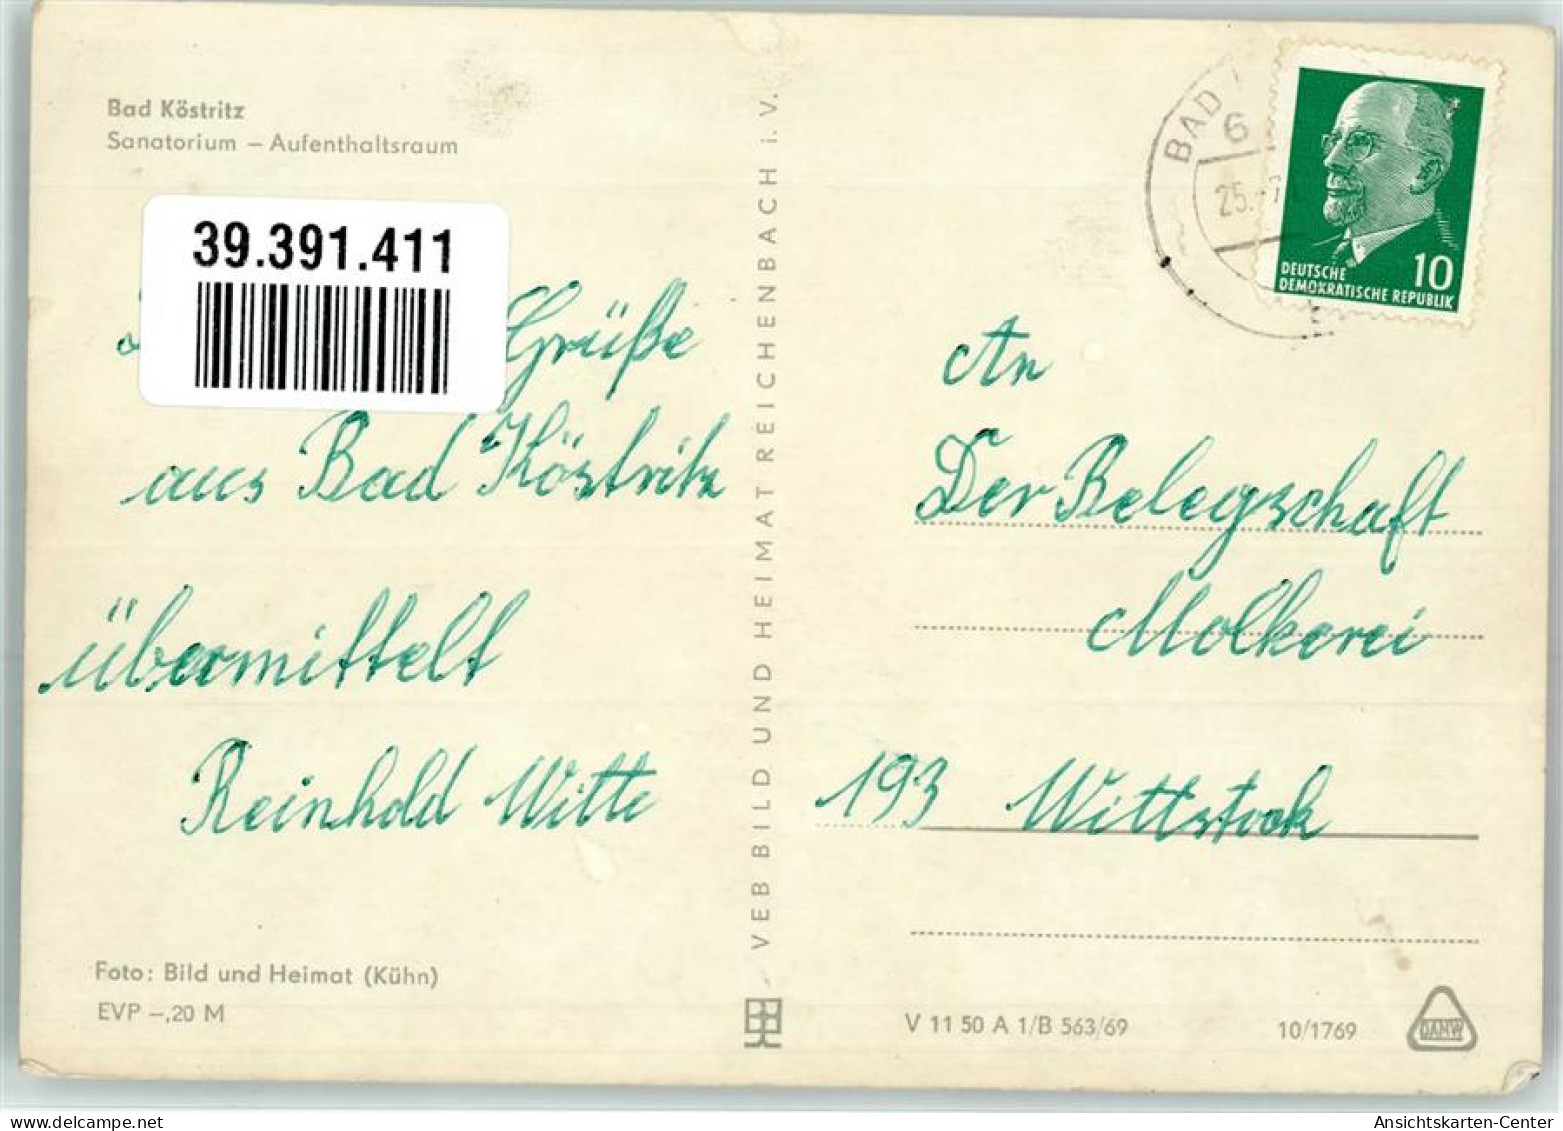 39391411 - Bad Koestritz - Bad Köstritz